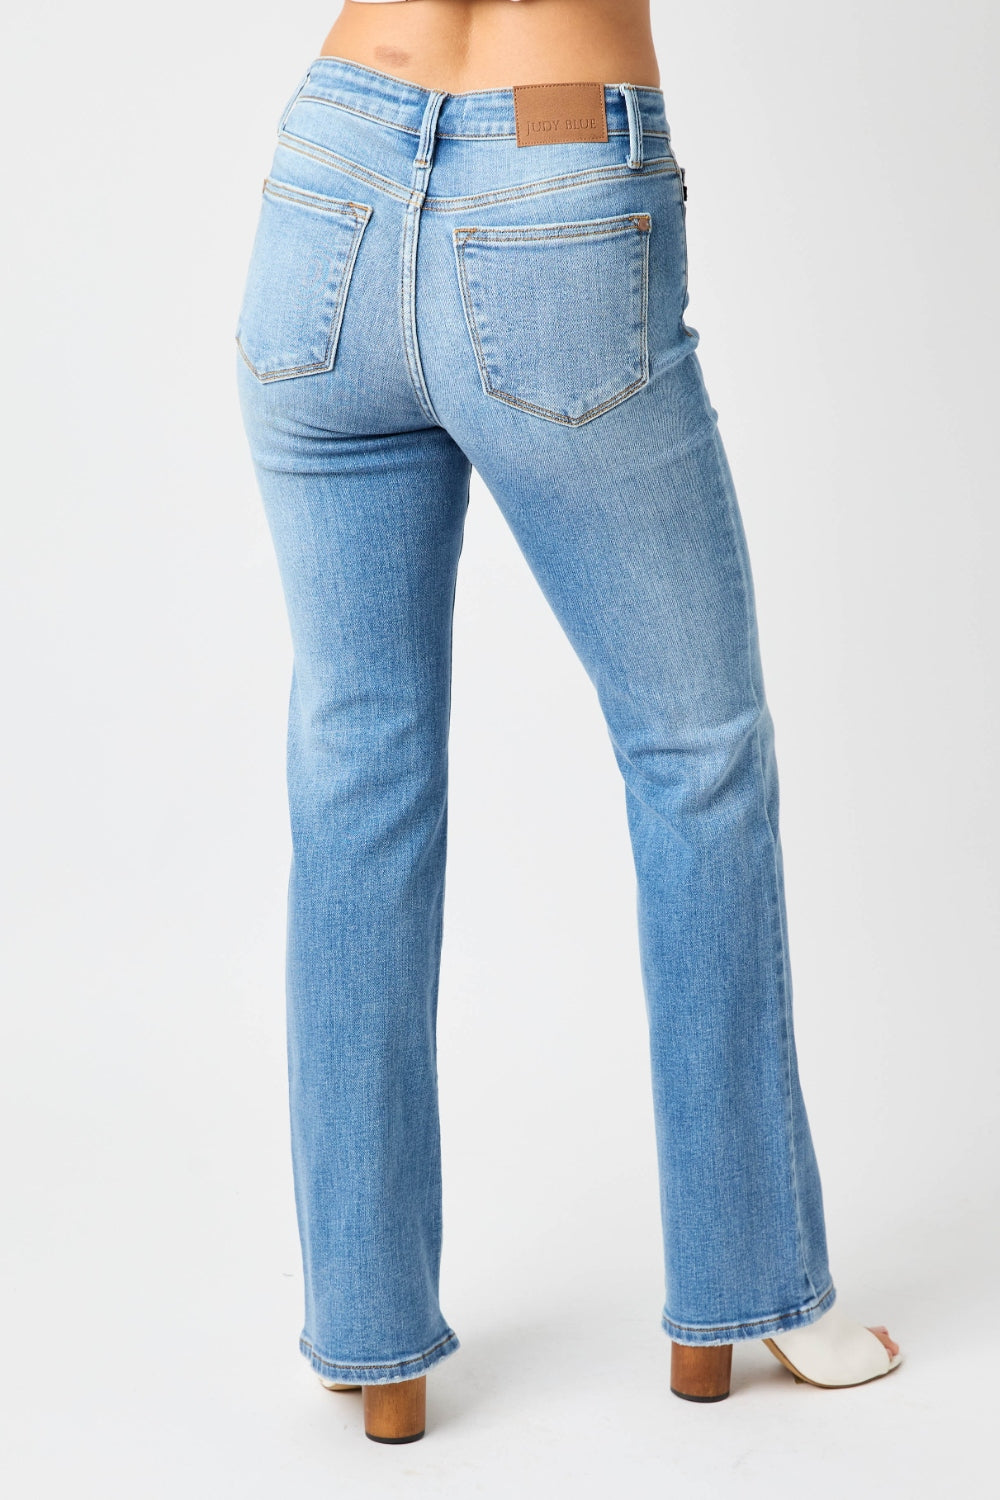 Judy Blue Full Size High Waist Straight Jeans - Moonlight Boutique